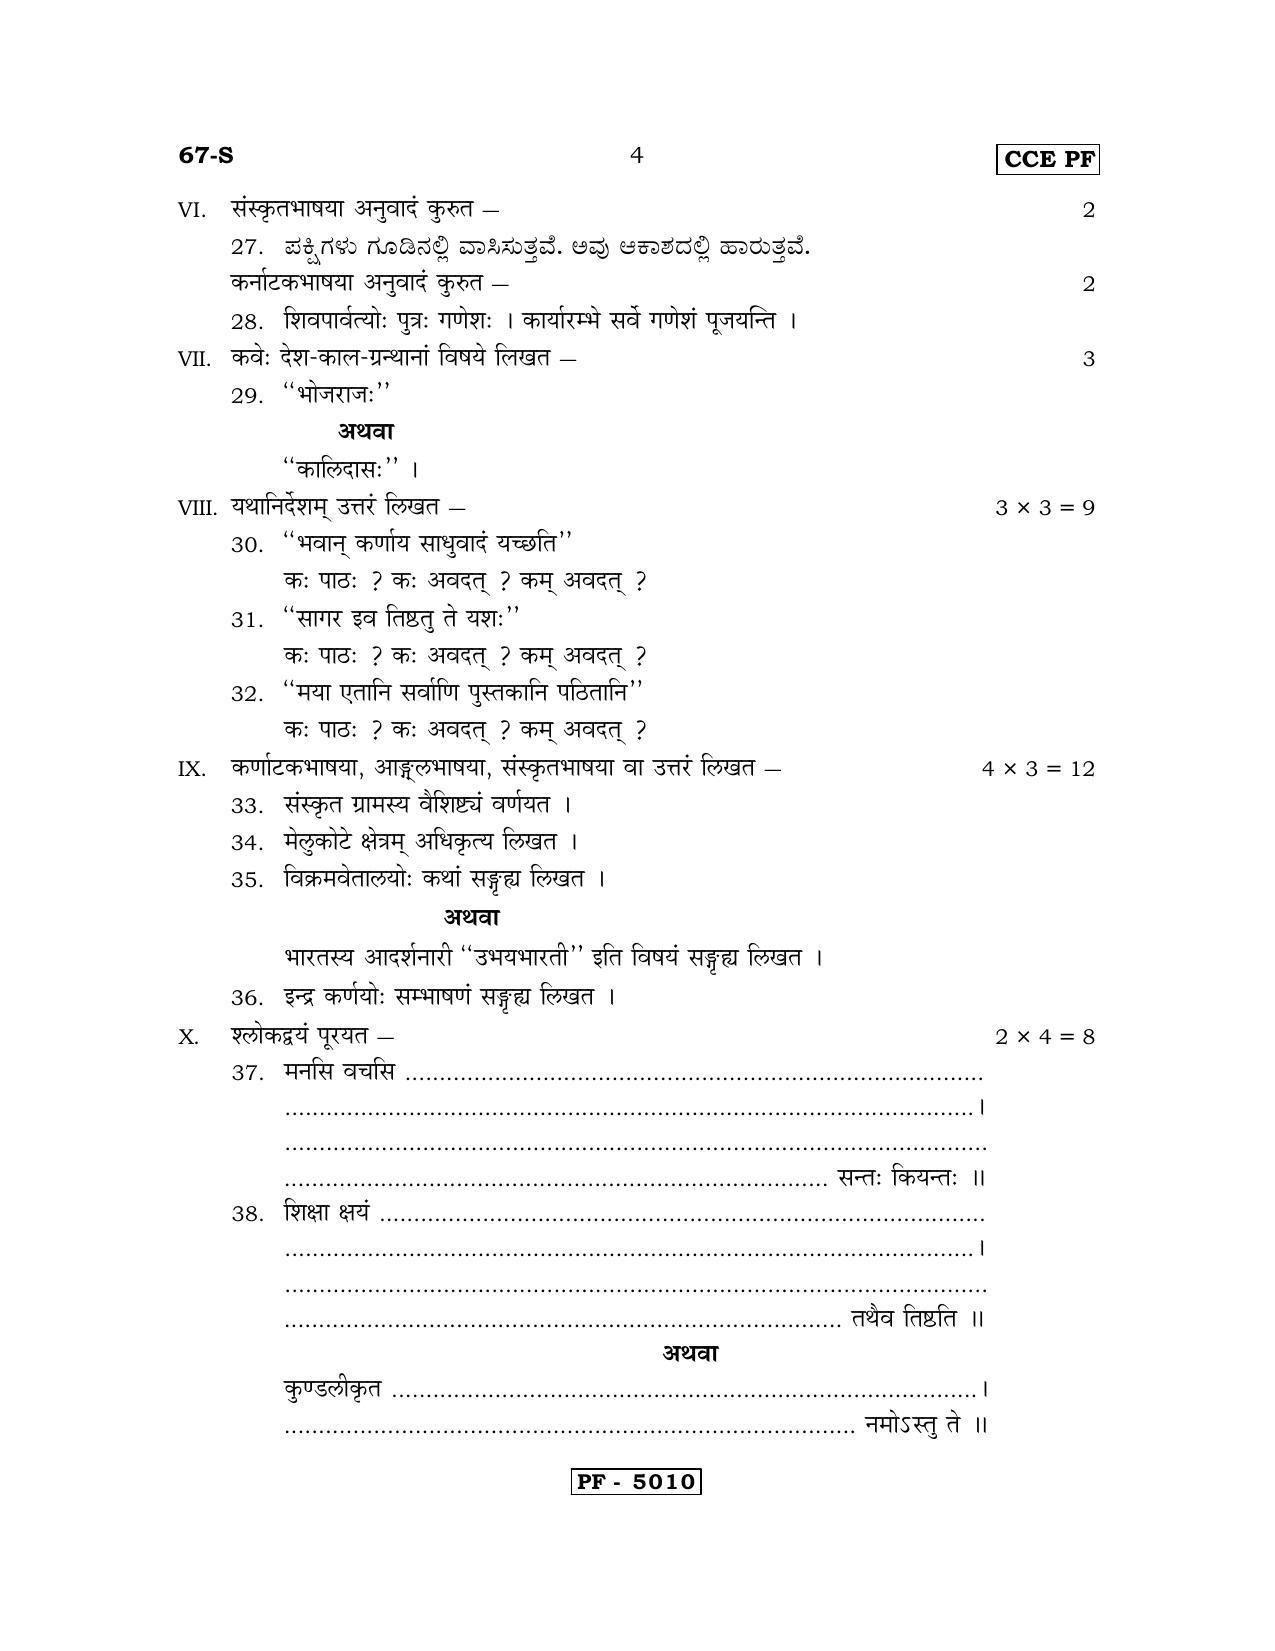 Karnataka SSLC Sanskrit - Third Language - SANSKRIT (67-S-CCE PF REVISED_39) April 2018 Question Paper - Page 4